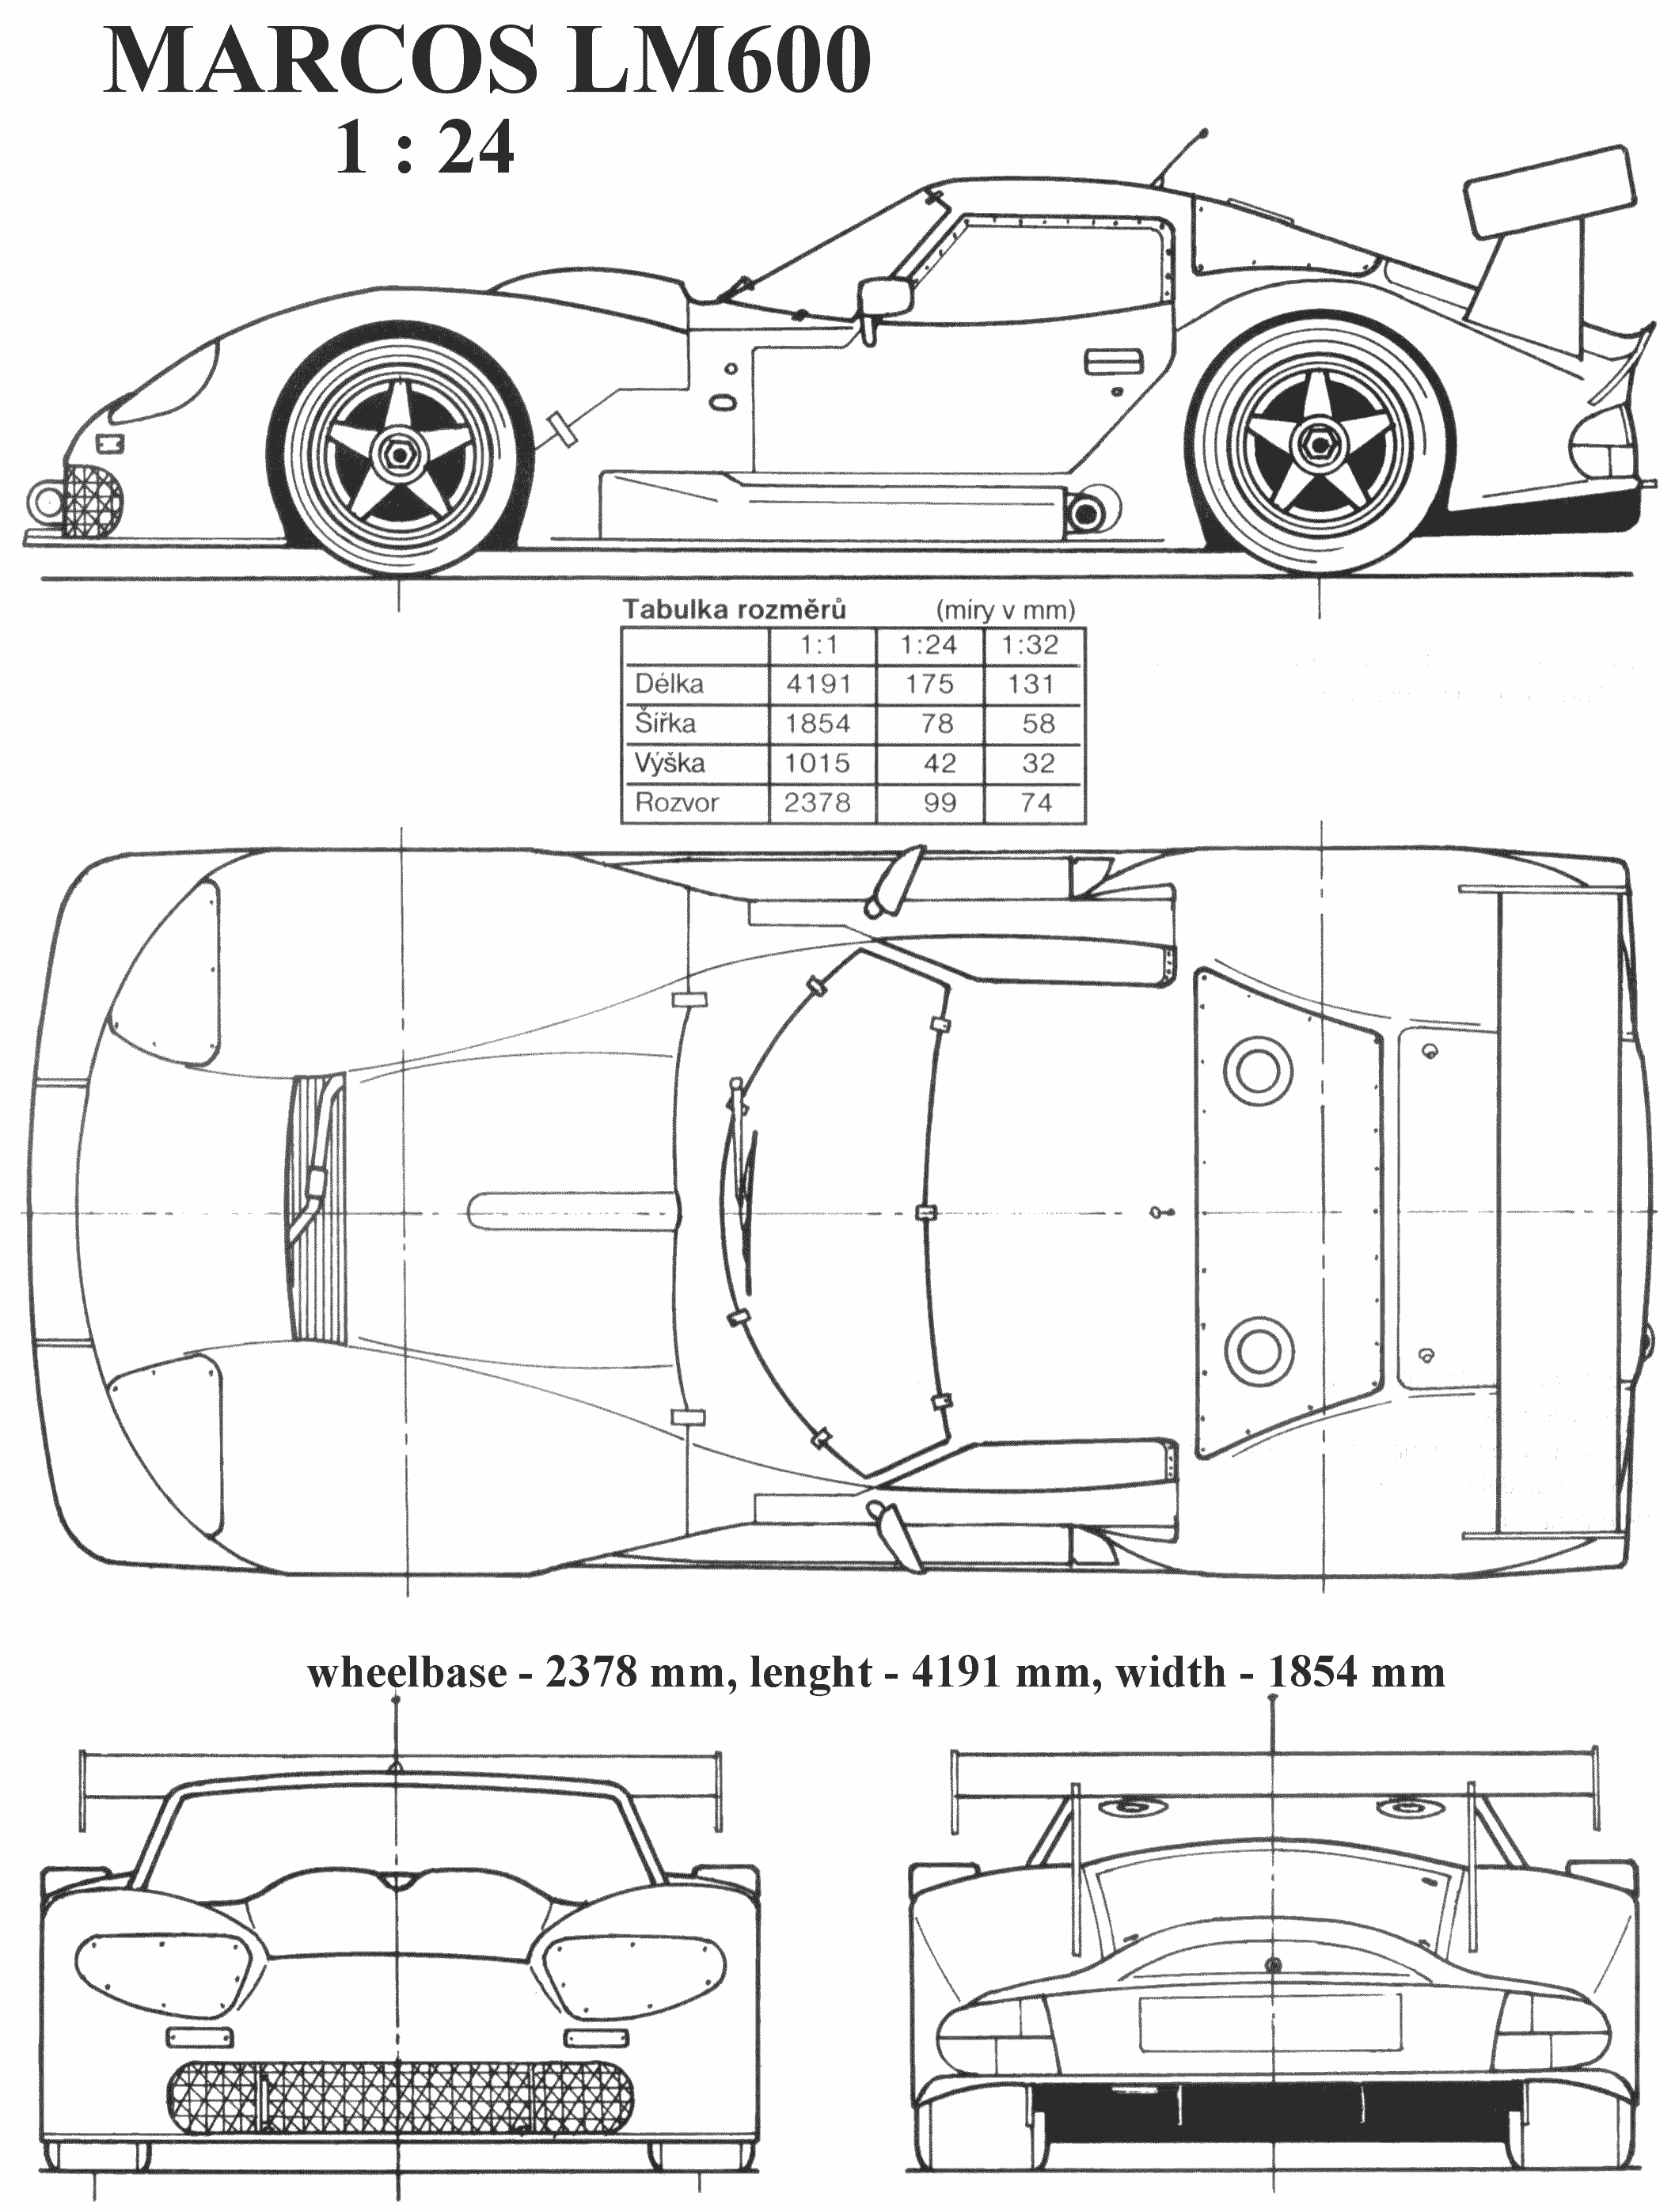 Marcos LM600 blueprint